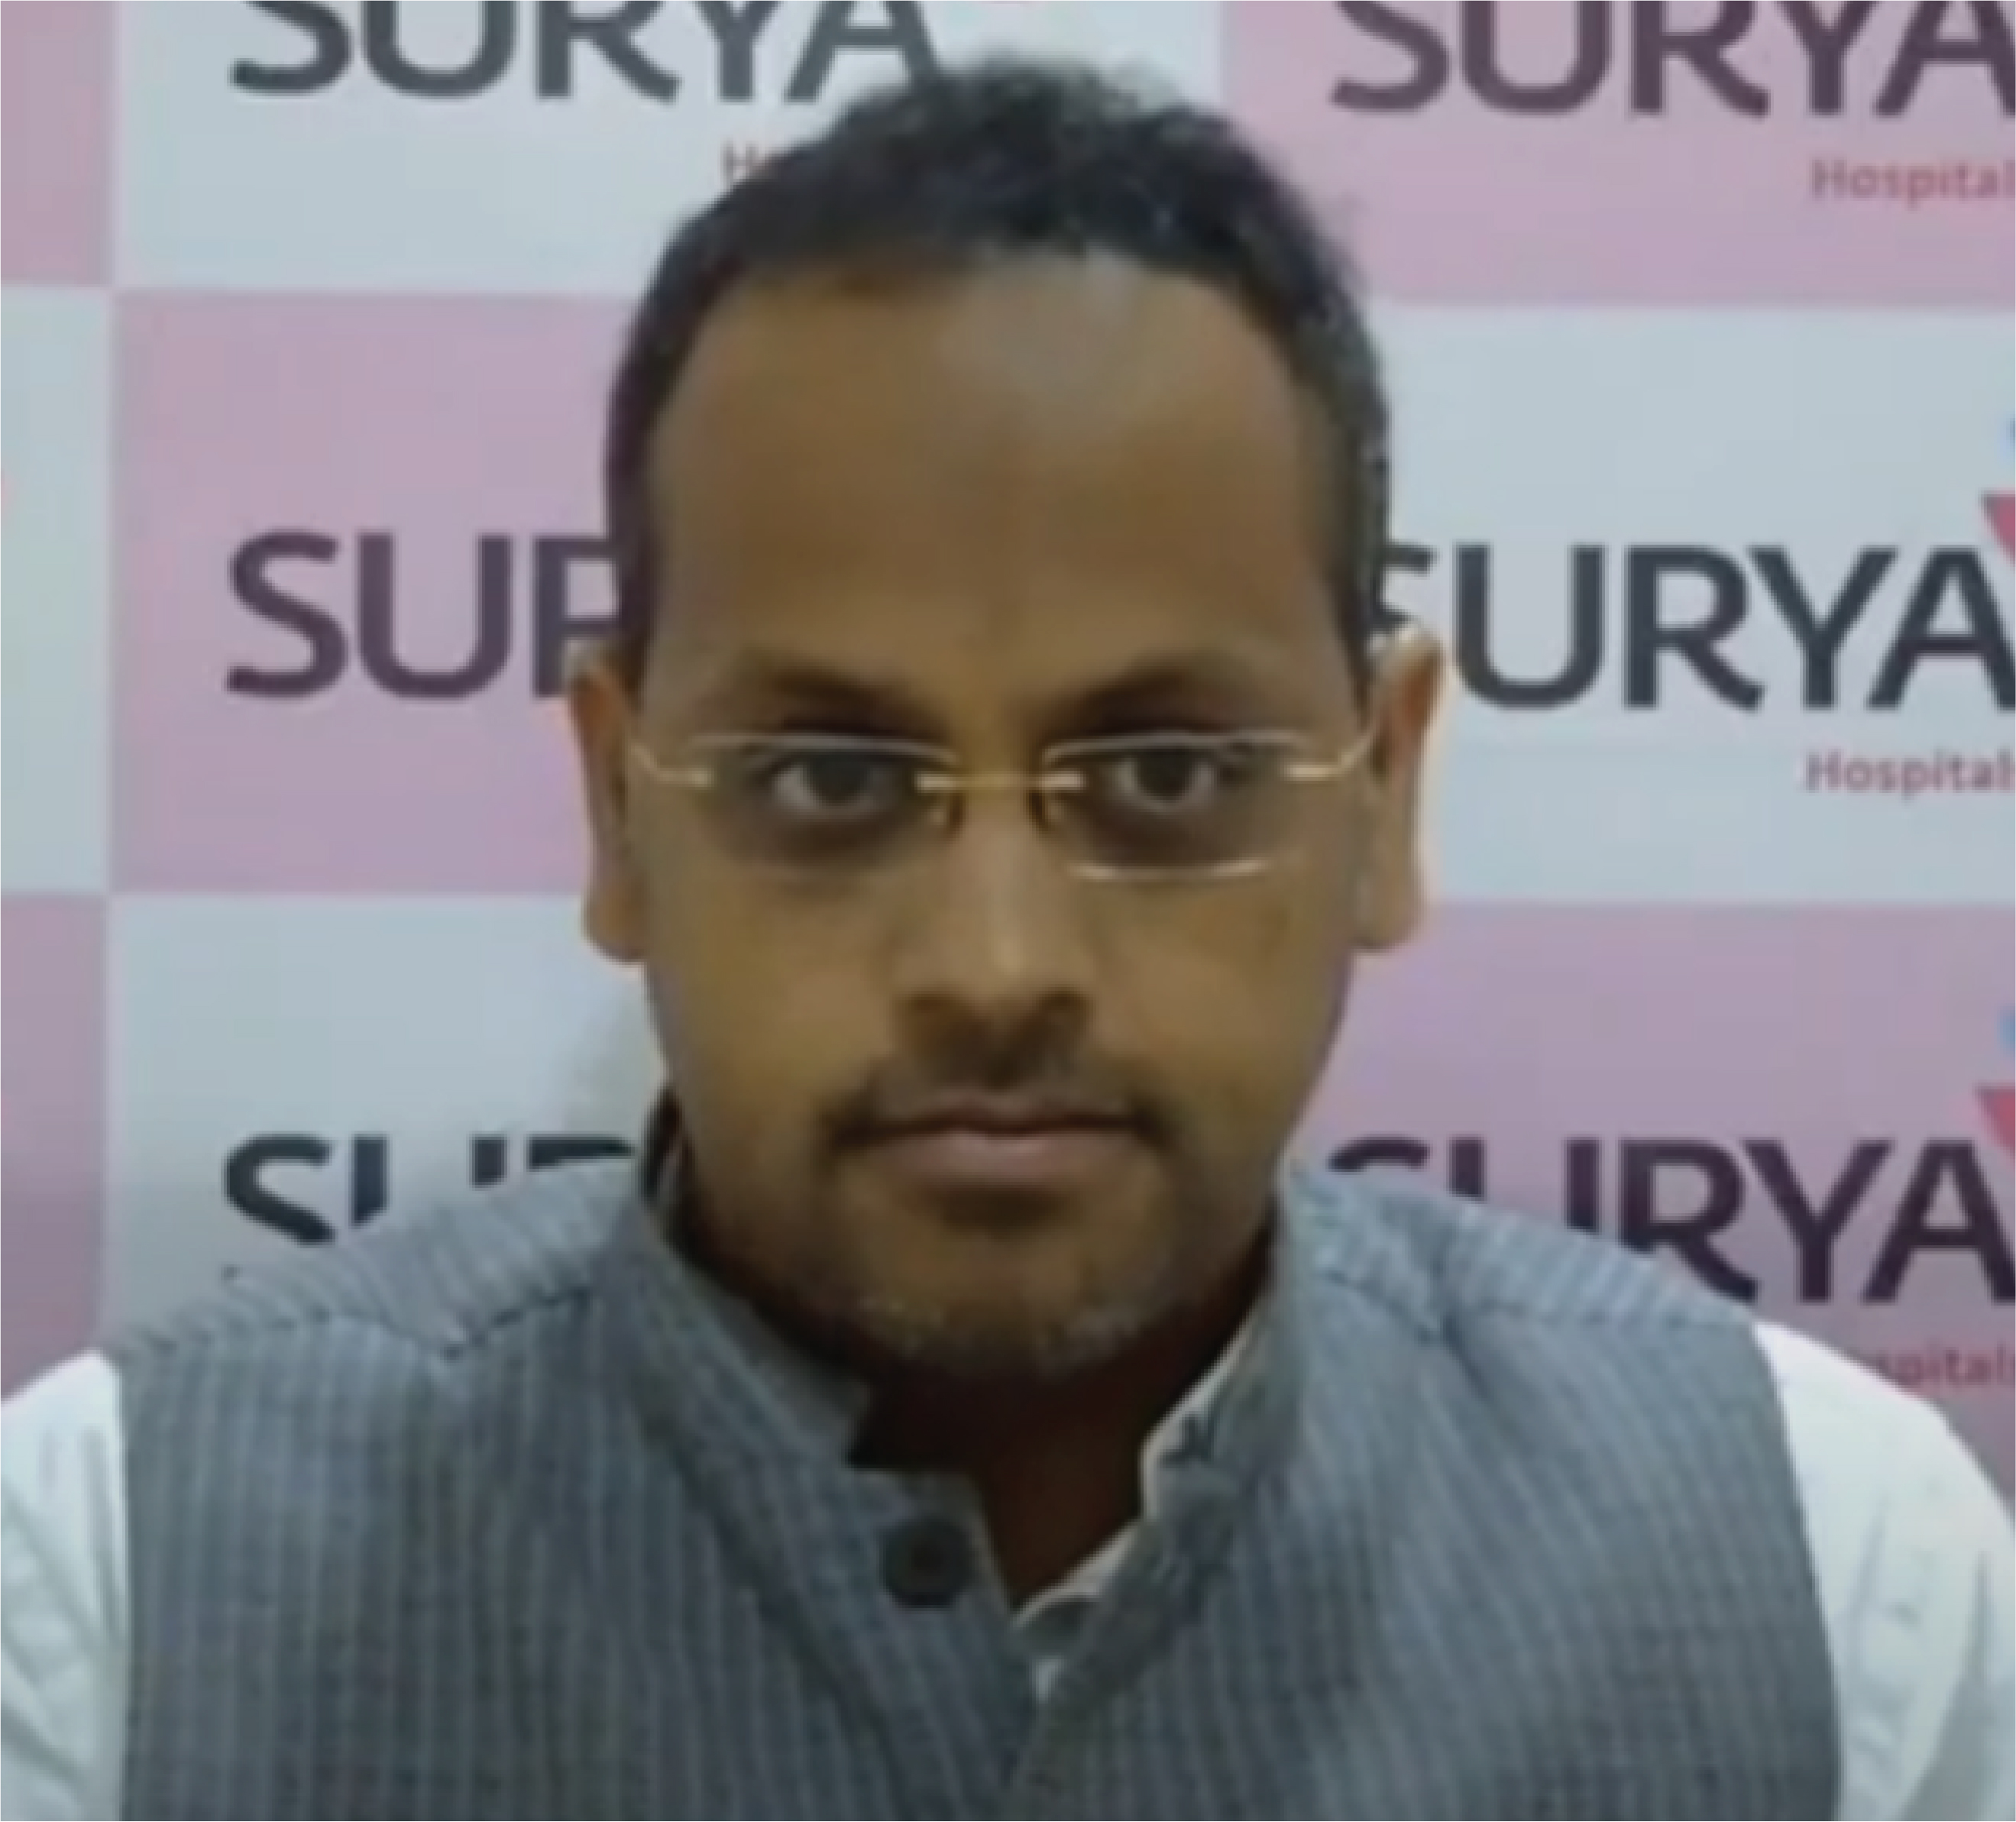 Surya Hospitals | Know more about Cervical Cancer | Dr. Samar Gupte | FB Live